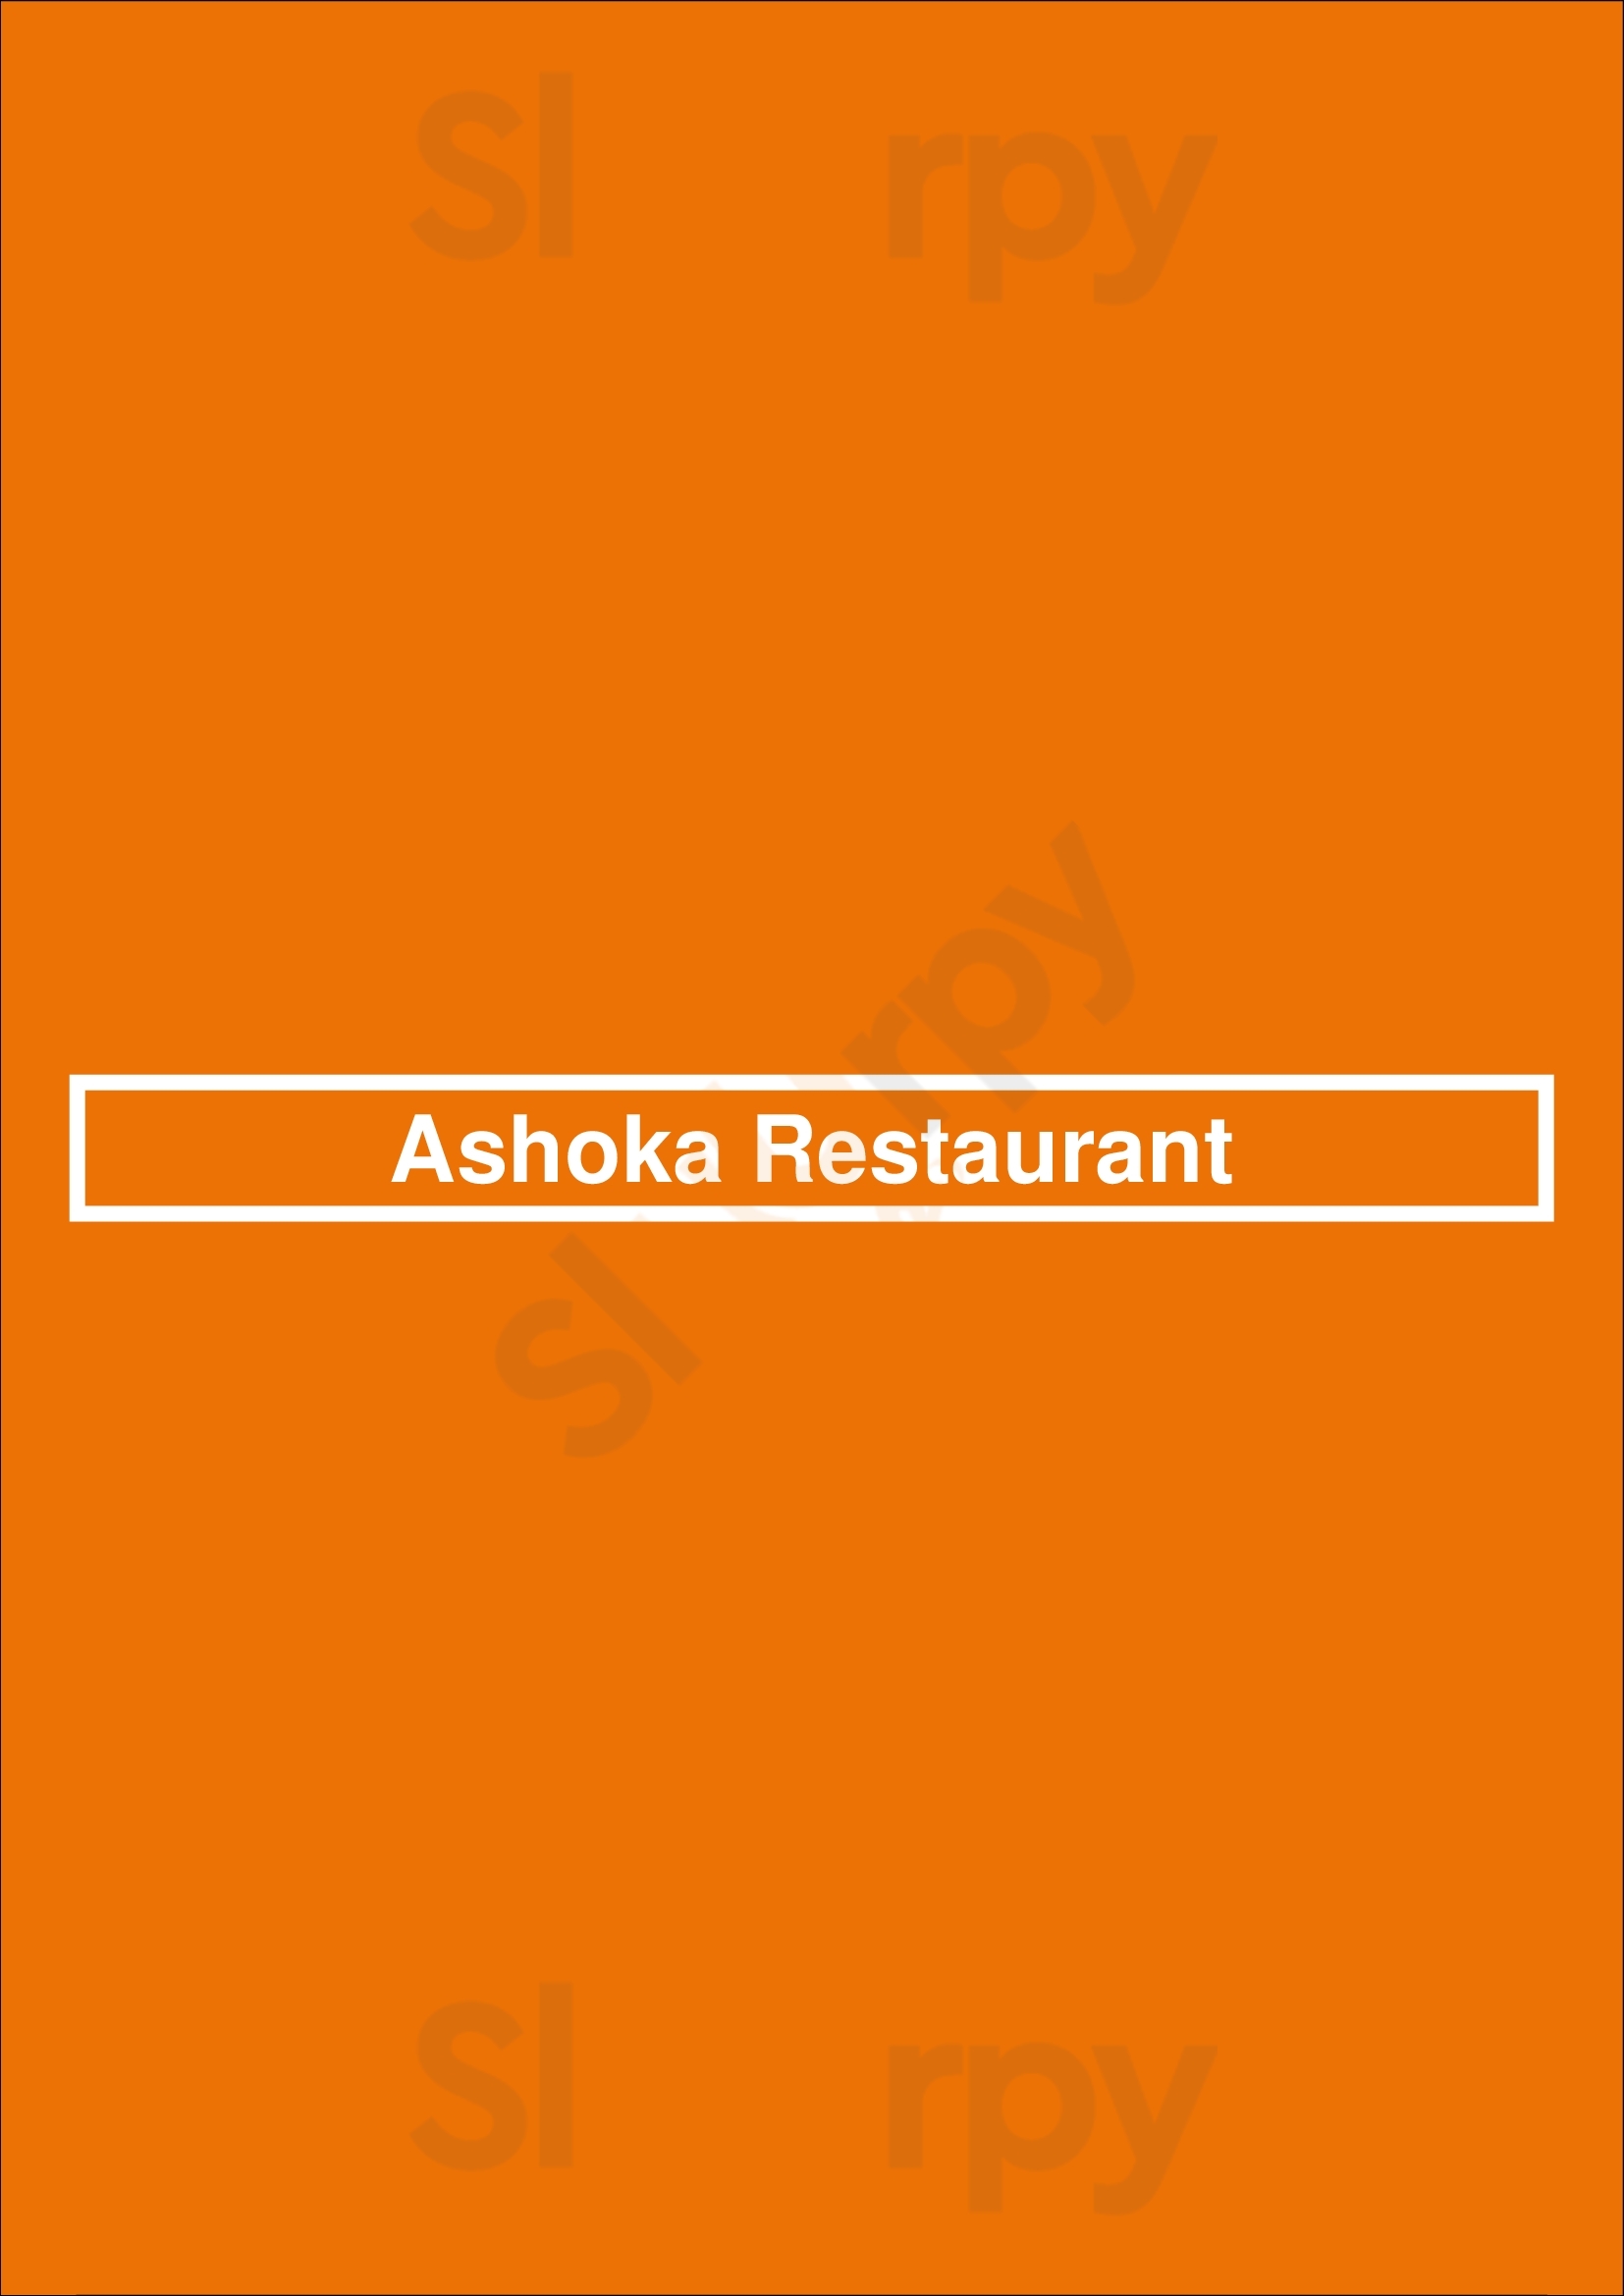 Ashoka New York City Menu - 1